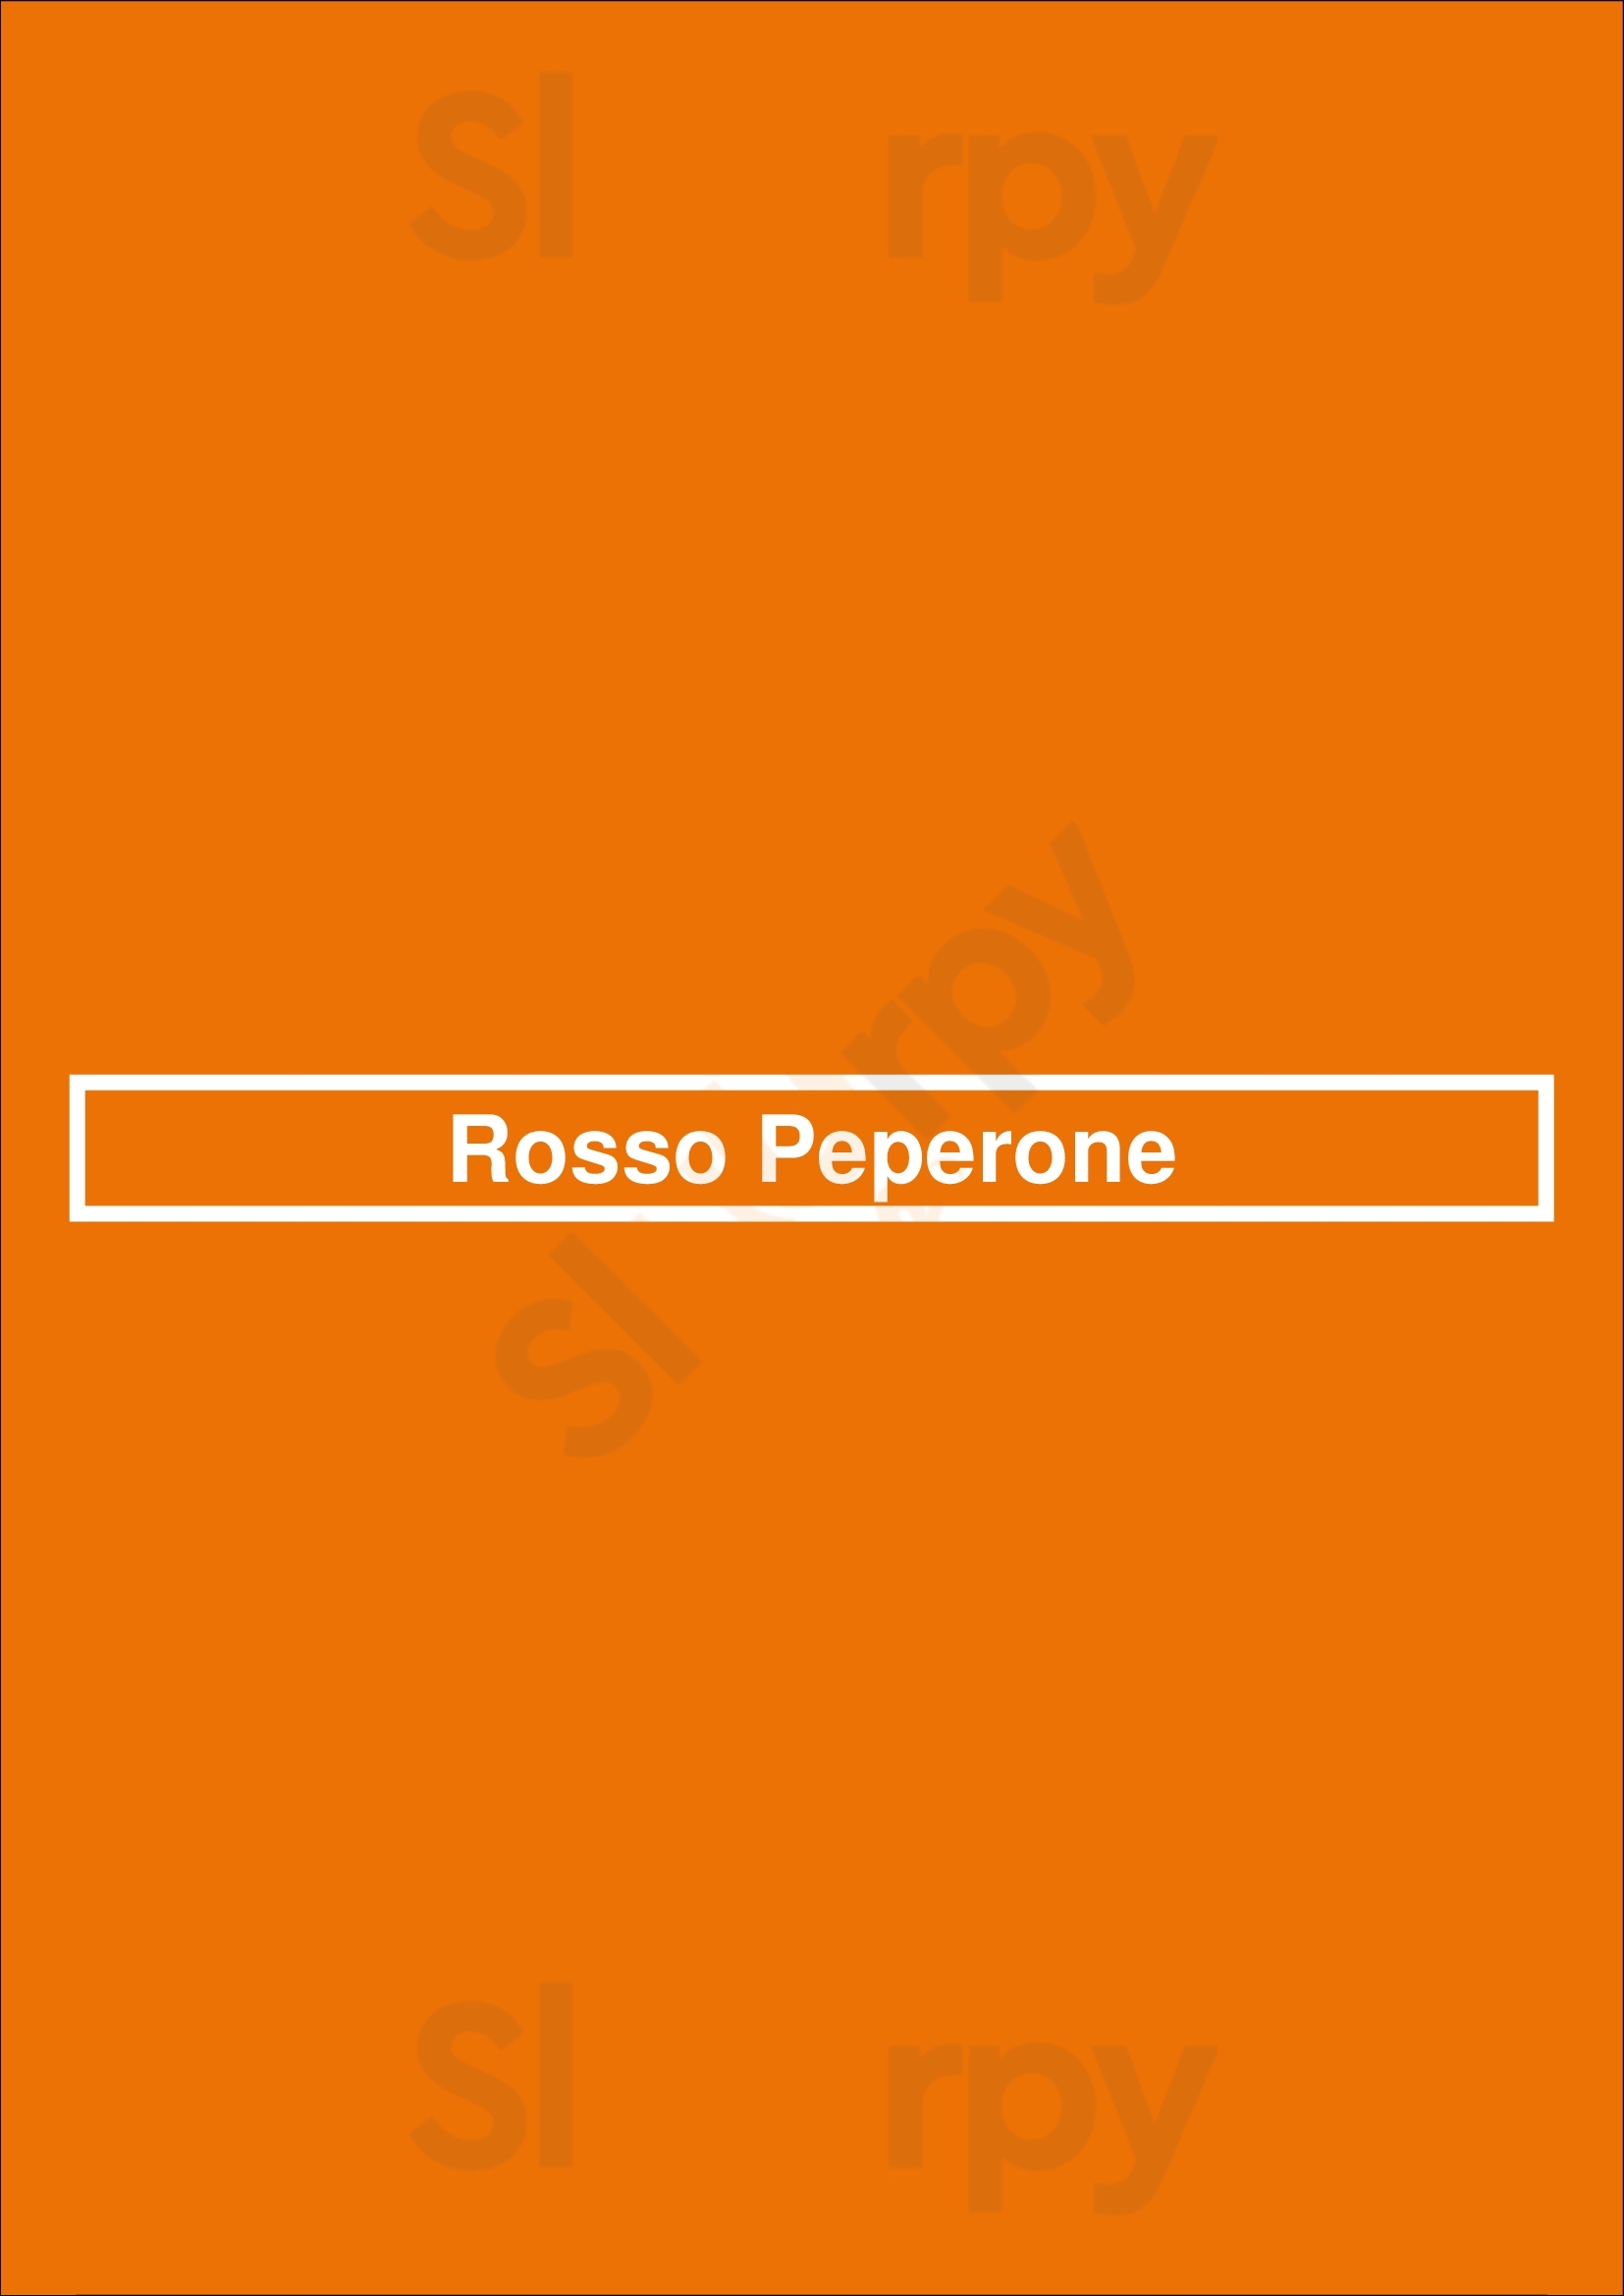 Rosso Peperone Bruxelles Menu - 1